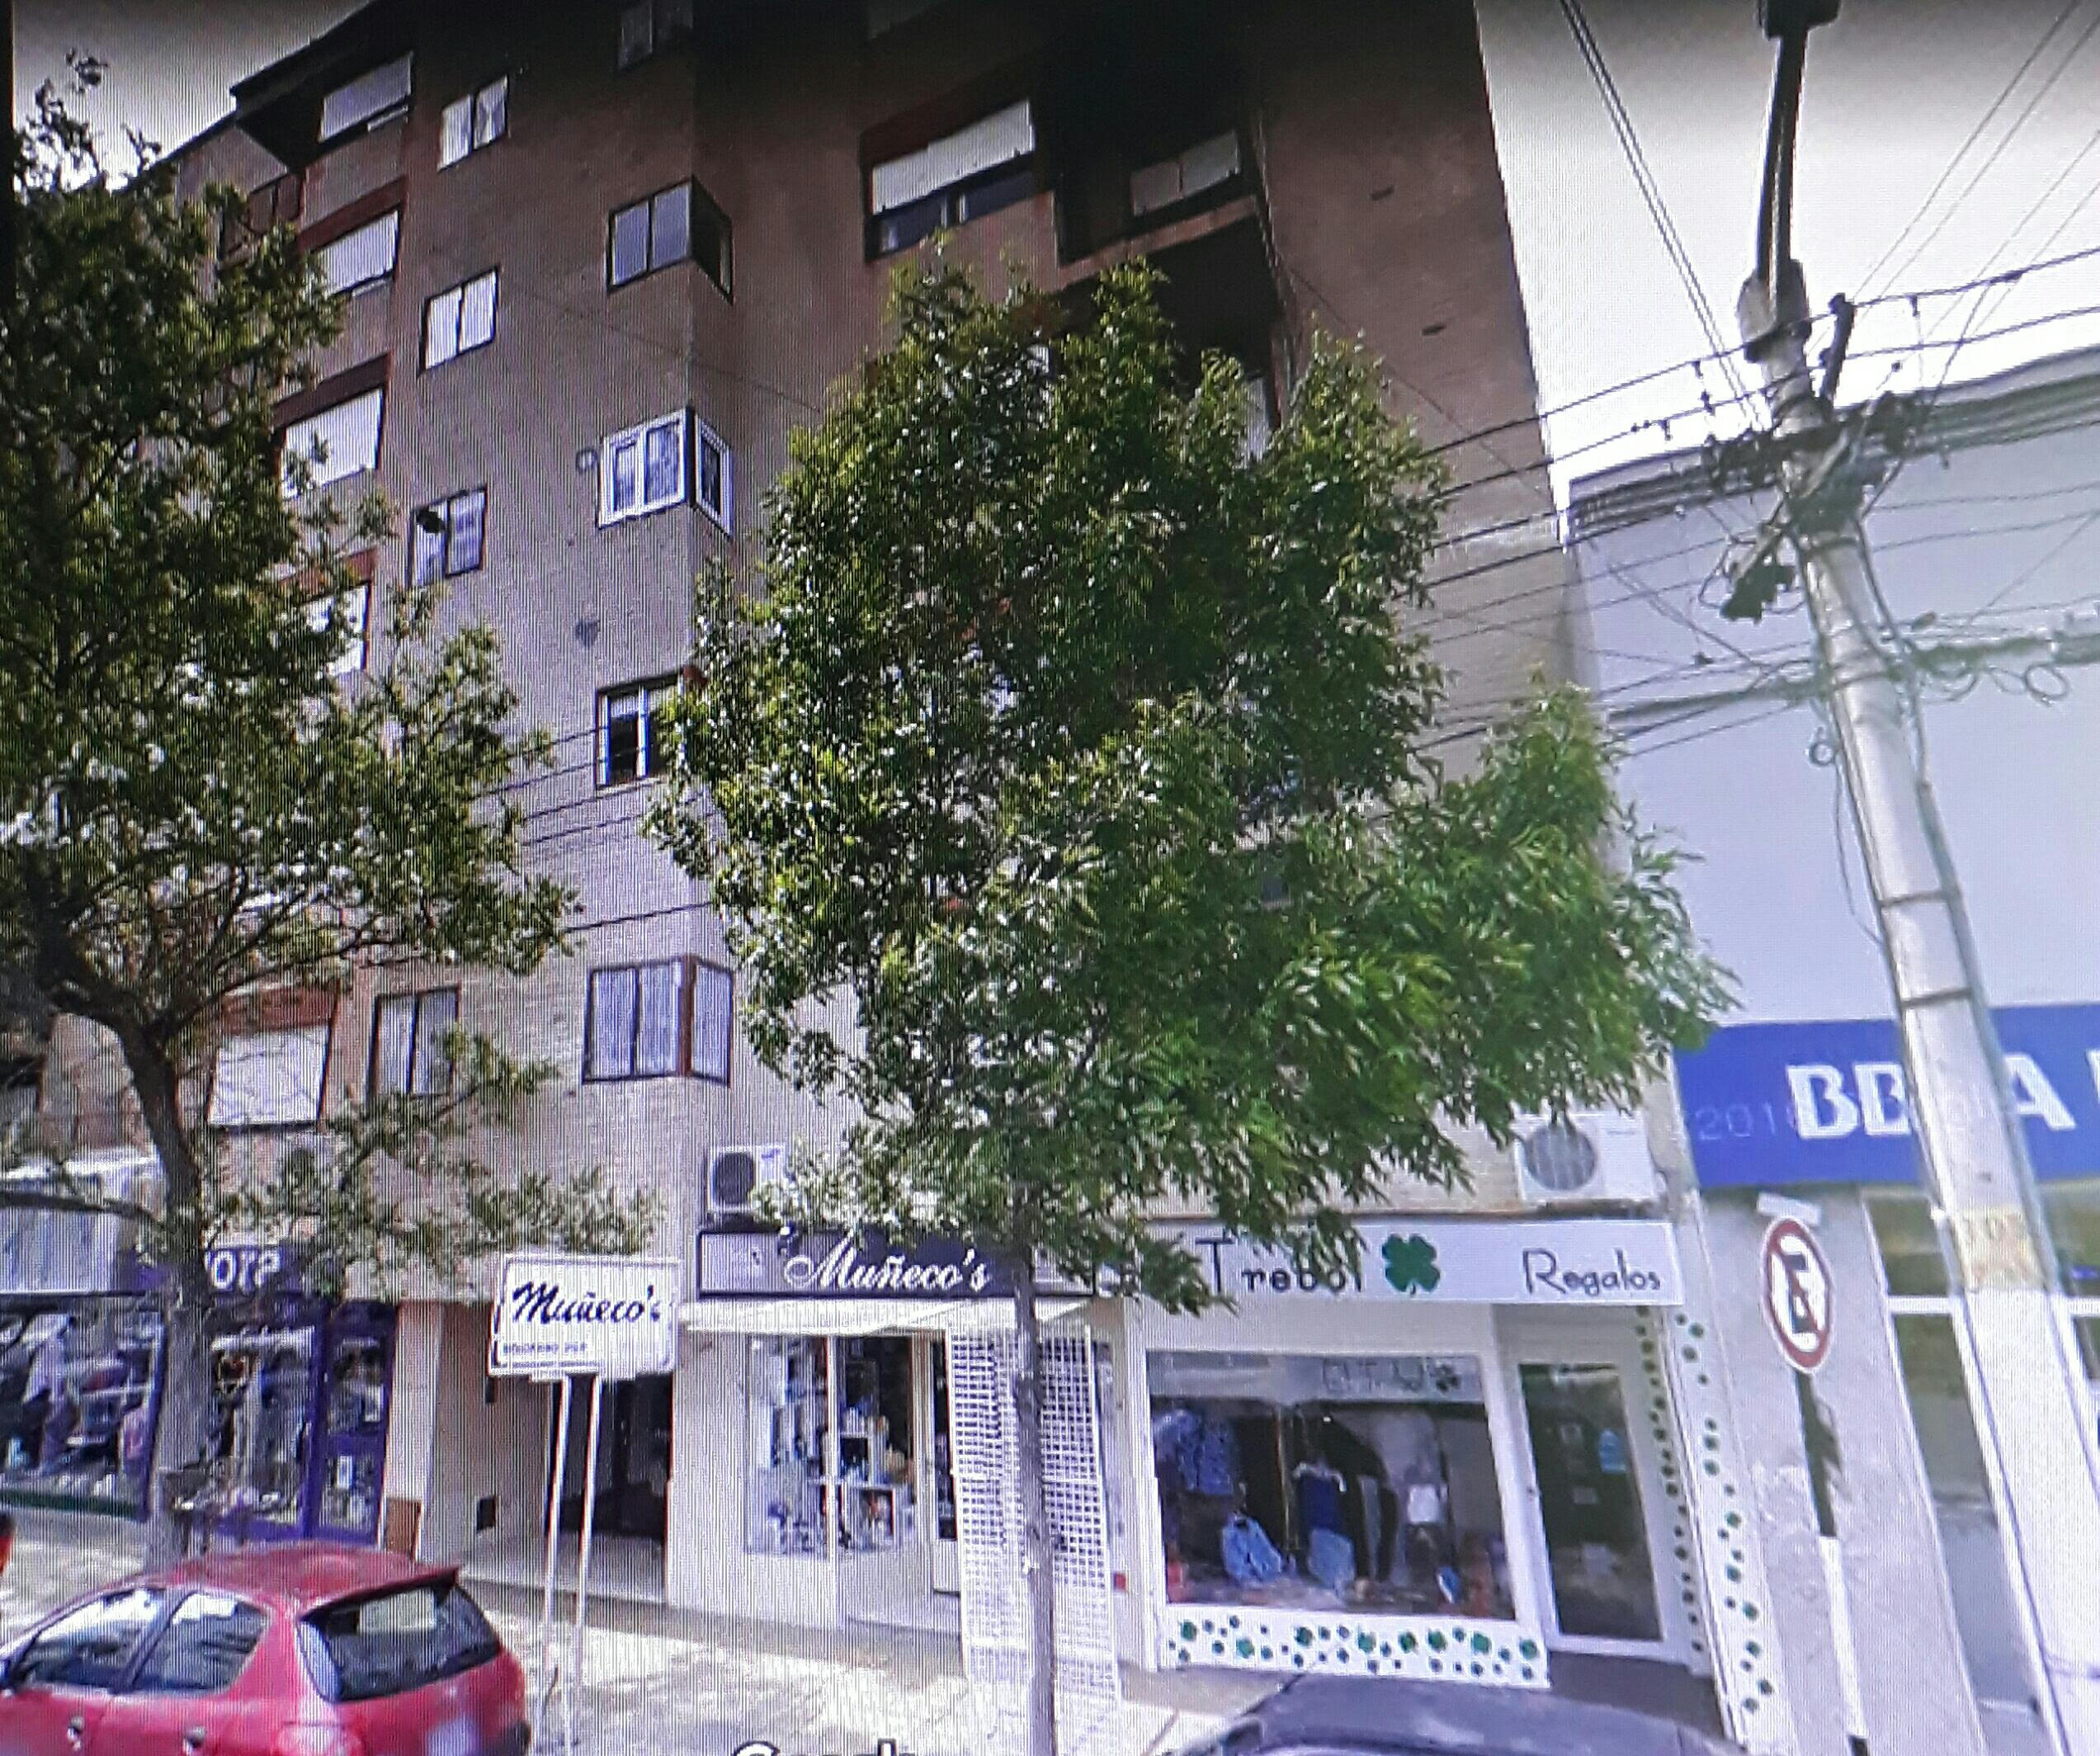 DEPARTAMENTO – FRENTE – Calle Belgrano N°266 piso 3 departamento «B»